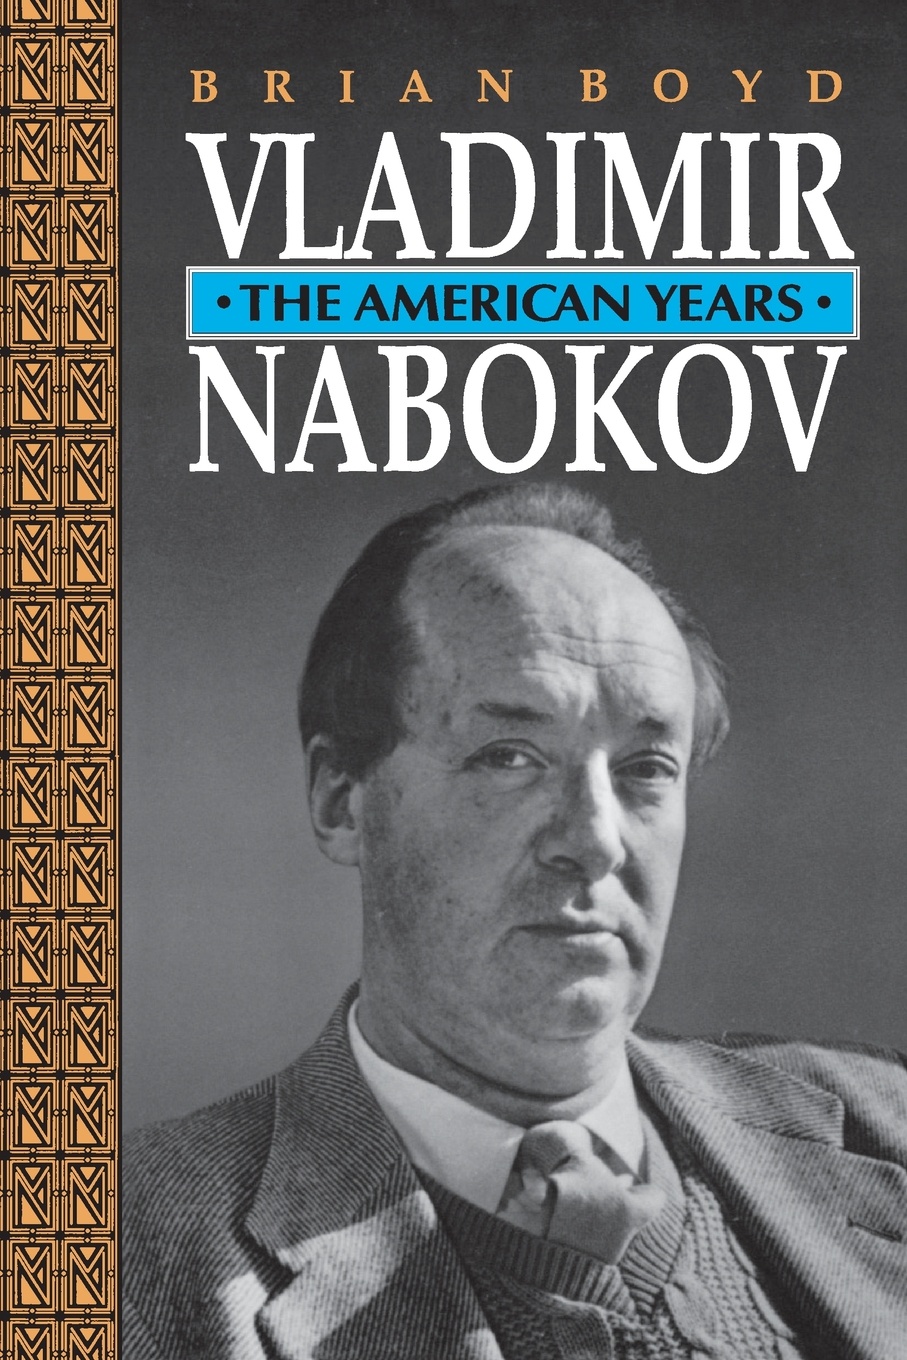 Vladimir Nabokov. The American Years